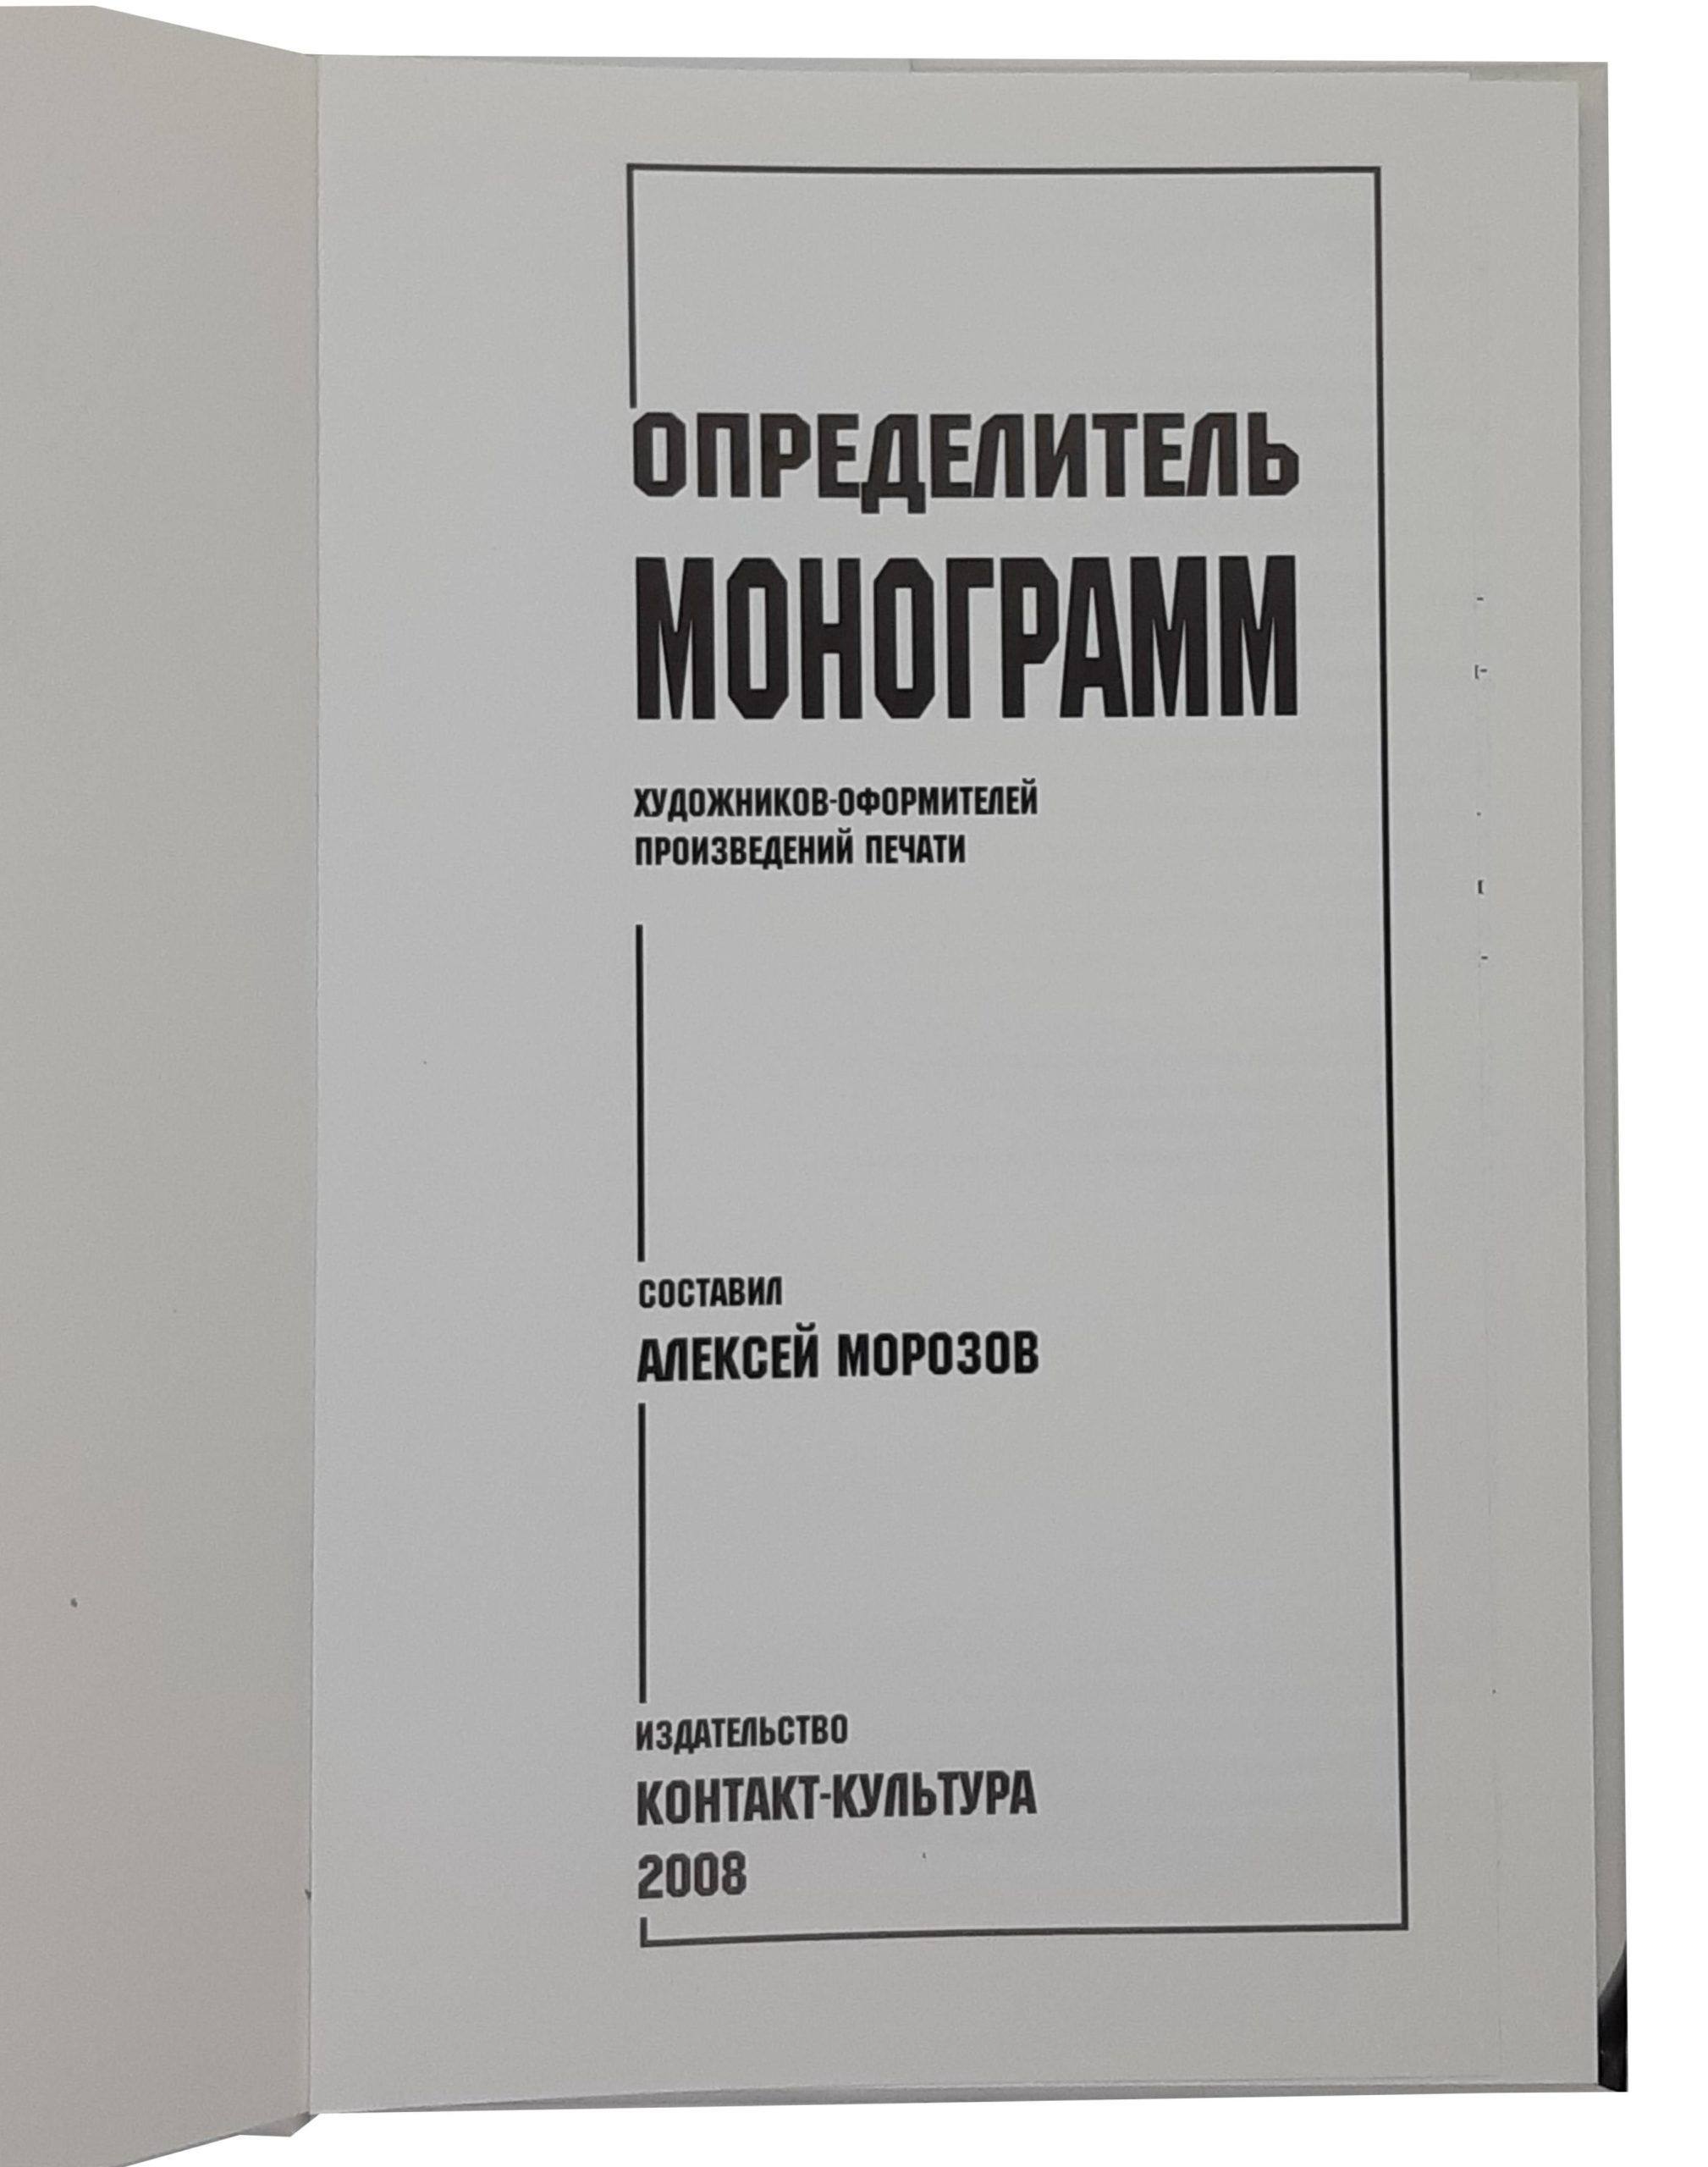 Comp. A. Morozov. Opredelitel monogramm. / Monogram guide.2008 - landofmagazines.com